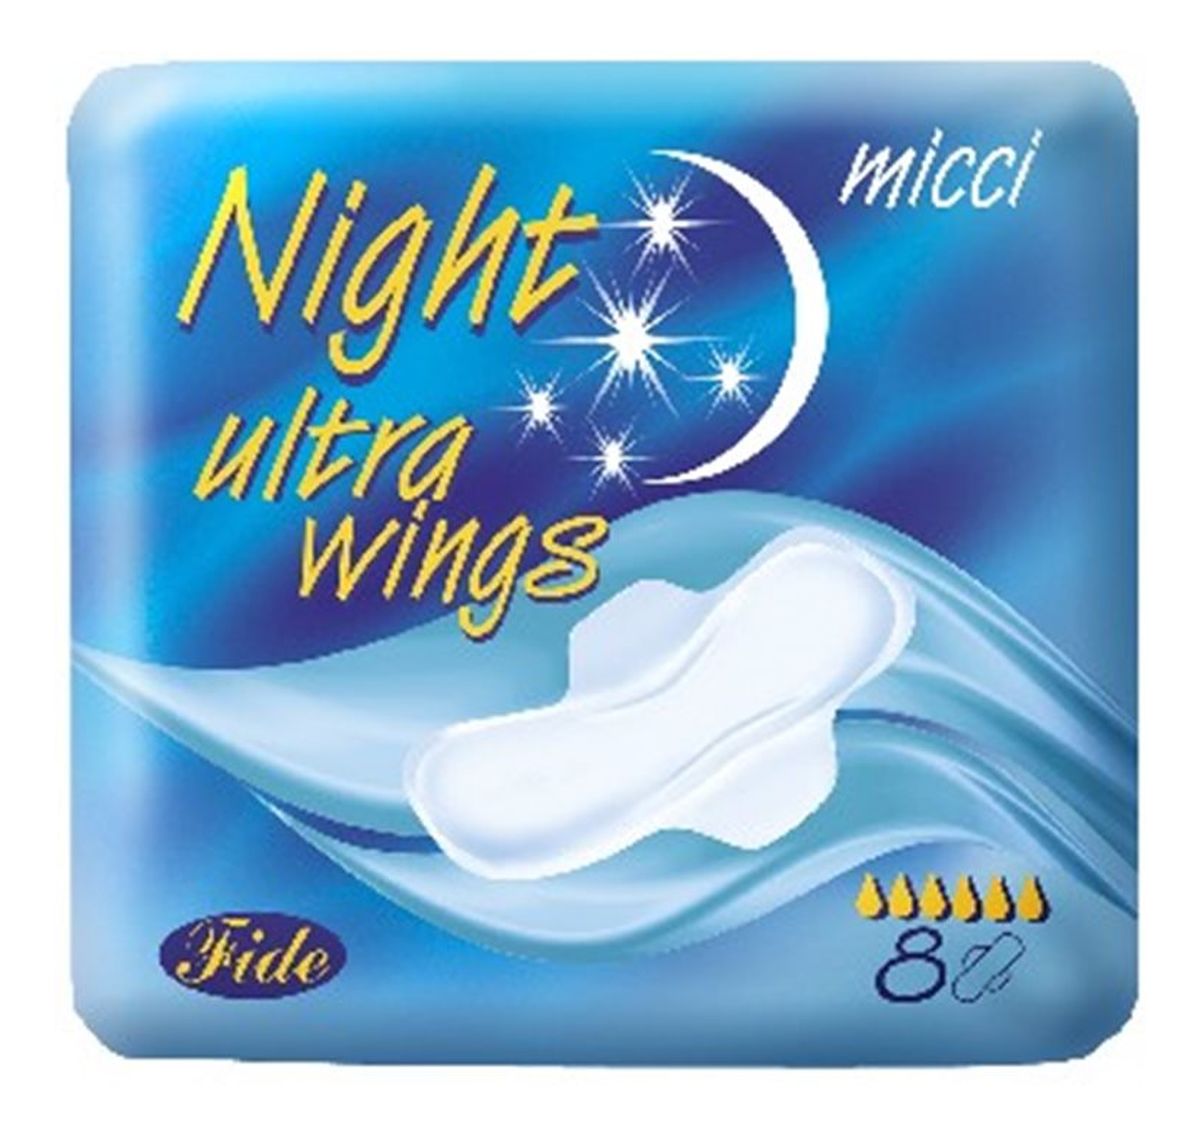 Ultra wings night ultracienkie podpaski na noc 8szt